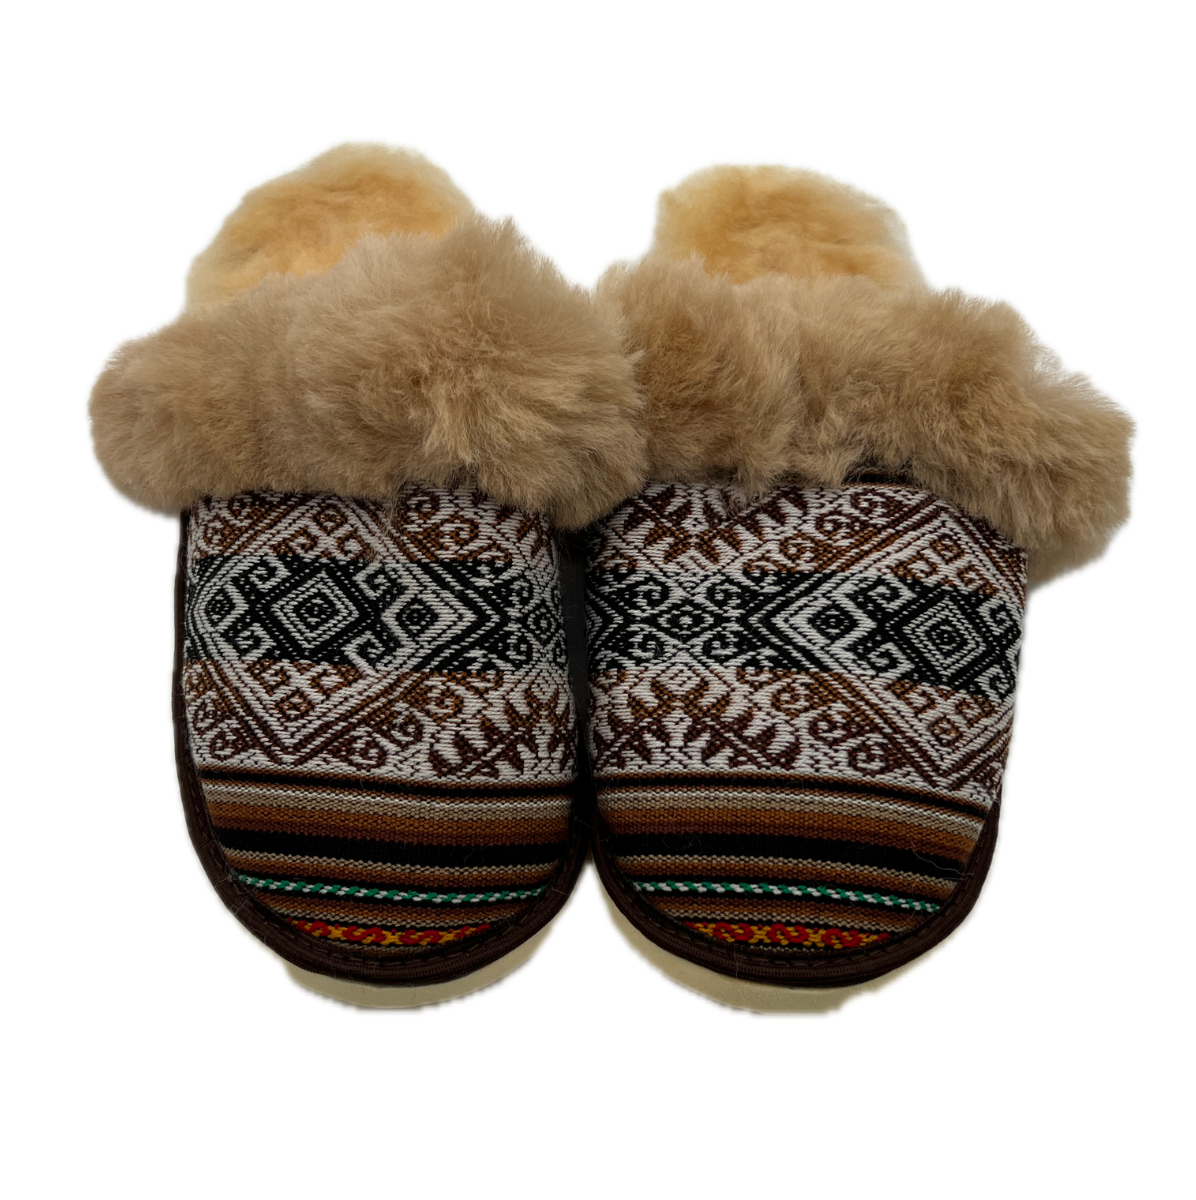 Handmade Peruvian Unisex Baby Alpaca Leather Slippers Booties